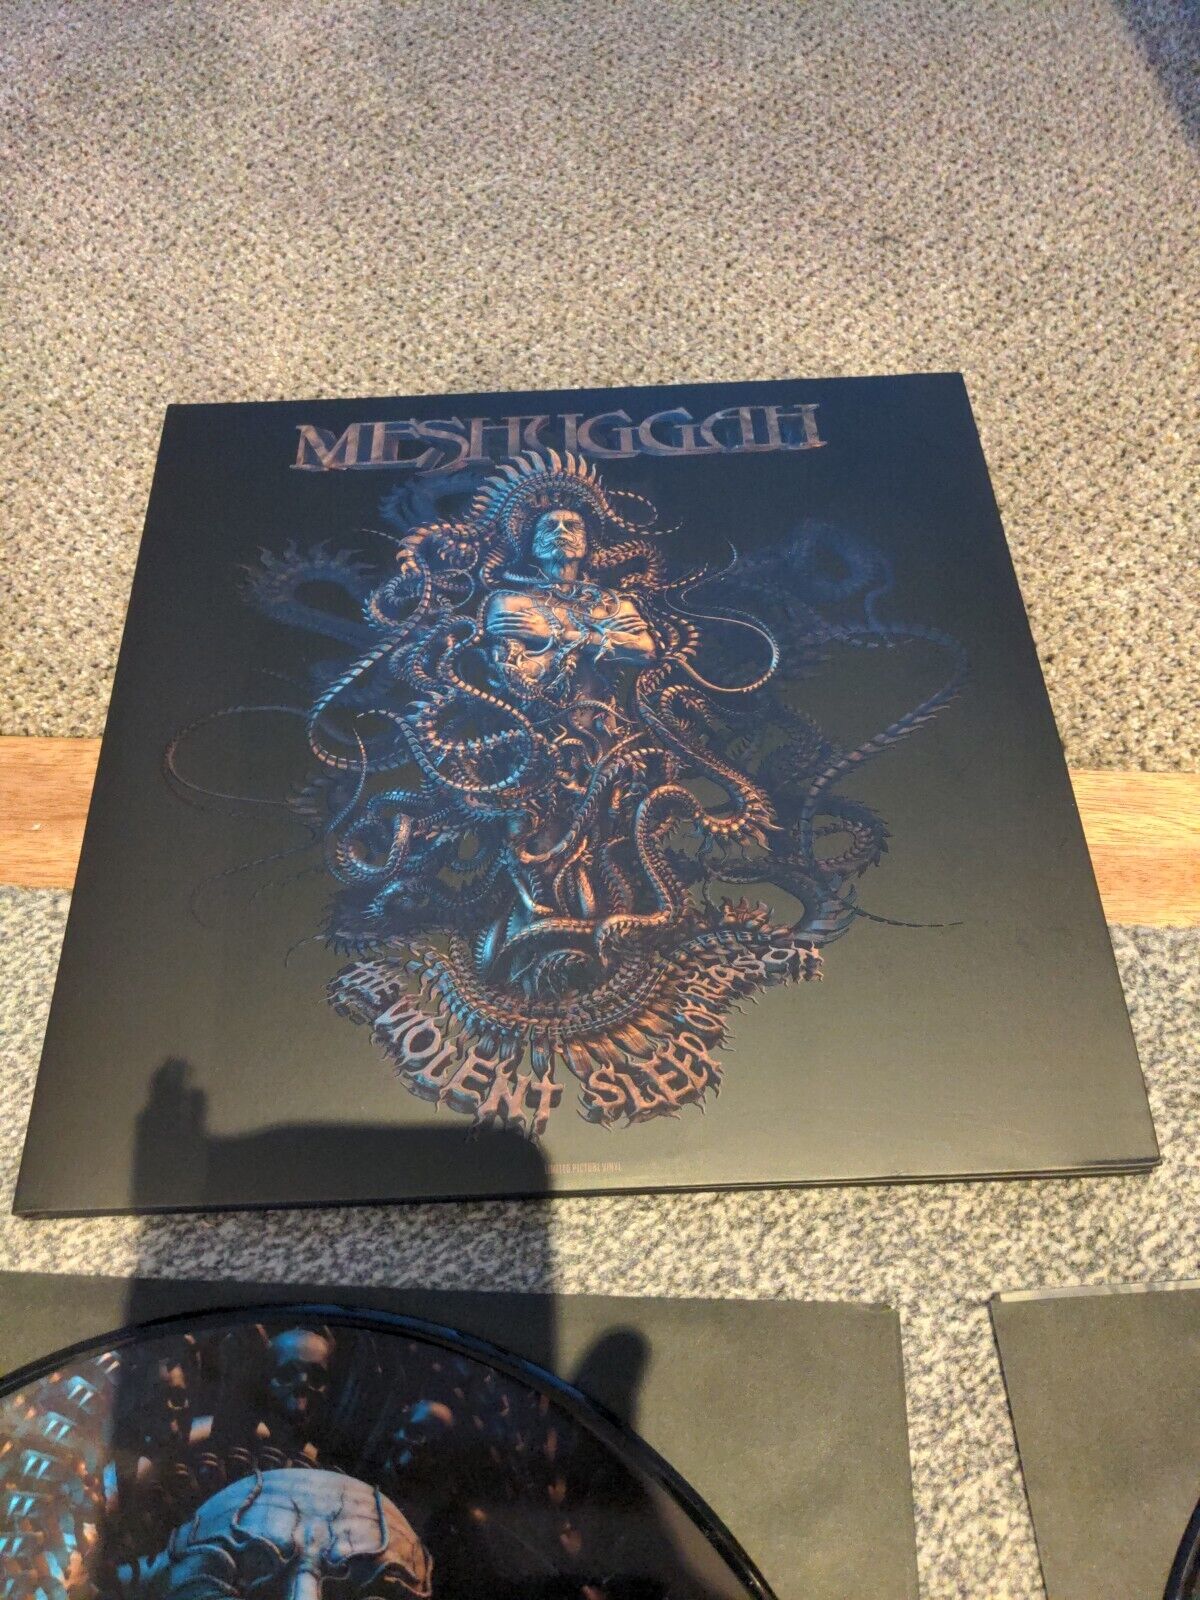 Meshuggah ‎– The Violent Sleep Of Reason NB 3483-3 , 2xLP, Picture Disc NM/NM/NM